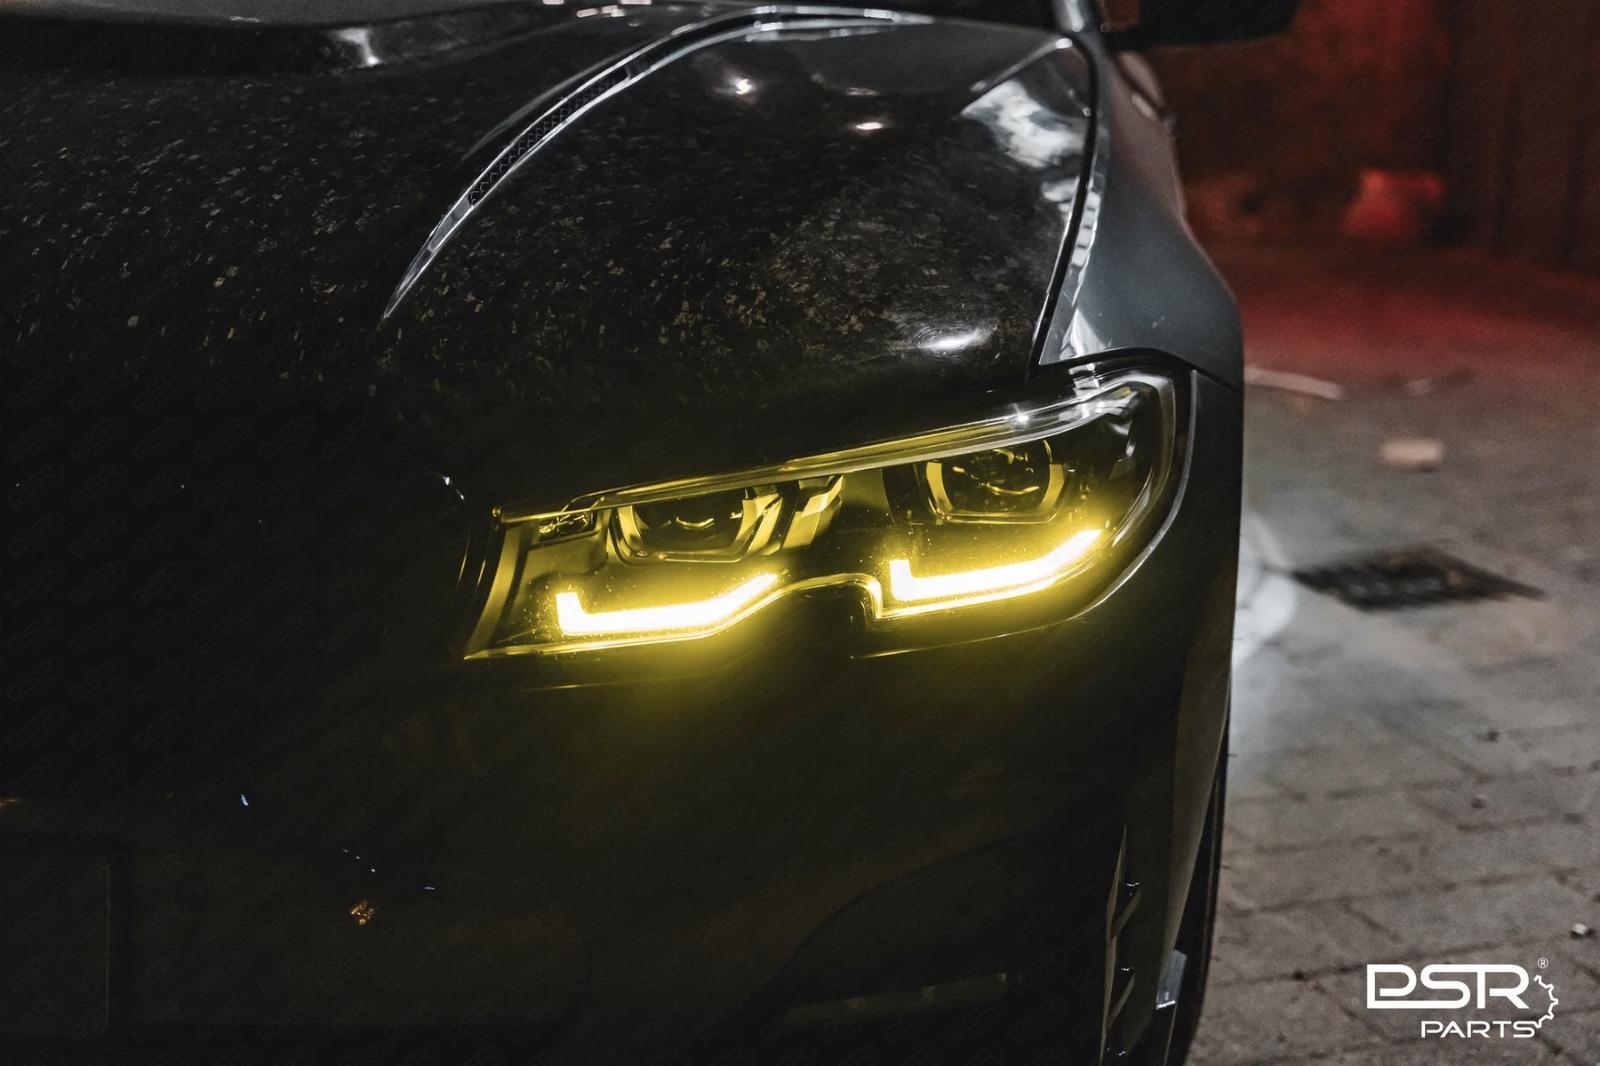 BMW G20 G21 PRE-LCI YELLOW CSL HEADLIGHT DAYTIME RUNNING LIGHT DRL UPGRADE MODULE